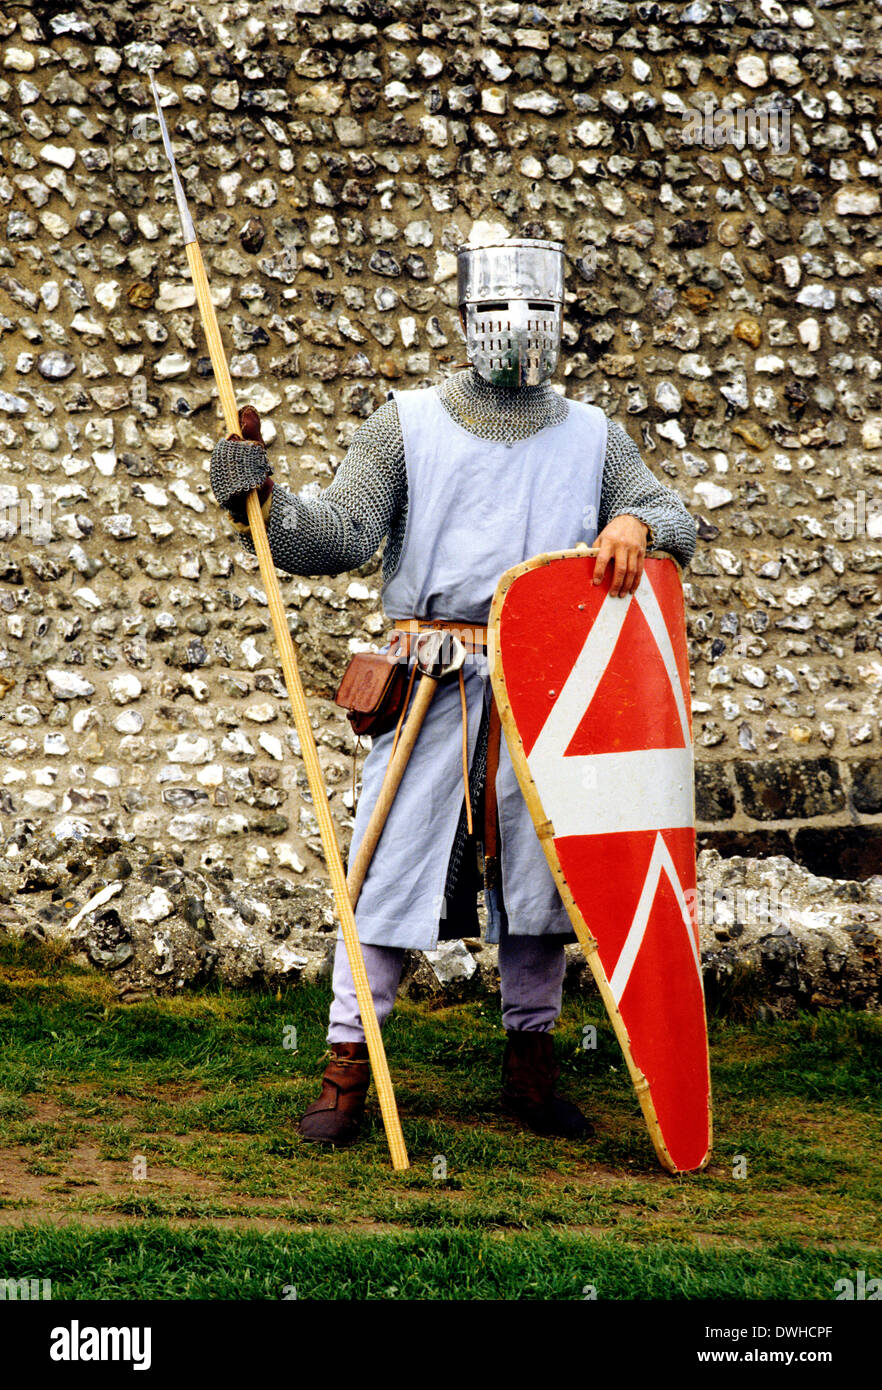 Reenactment, Norman Fußsoldat, Soldaten 11. Jahrhundert Waffen Schild Lanze England UK Stockfoto